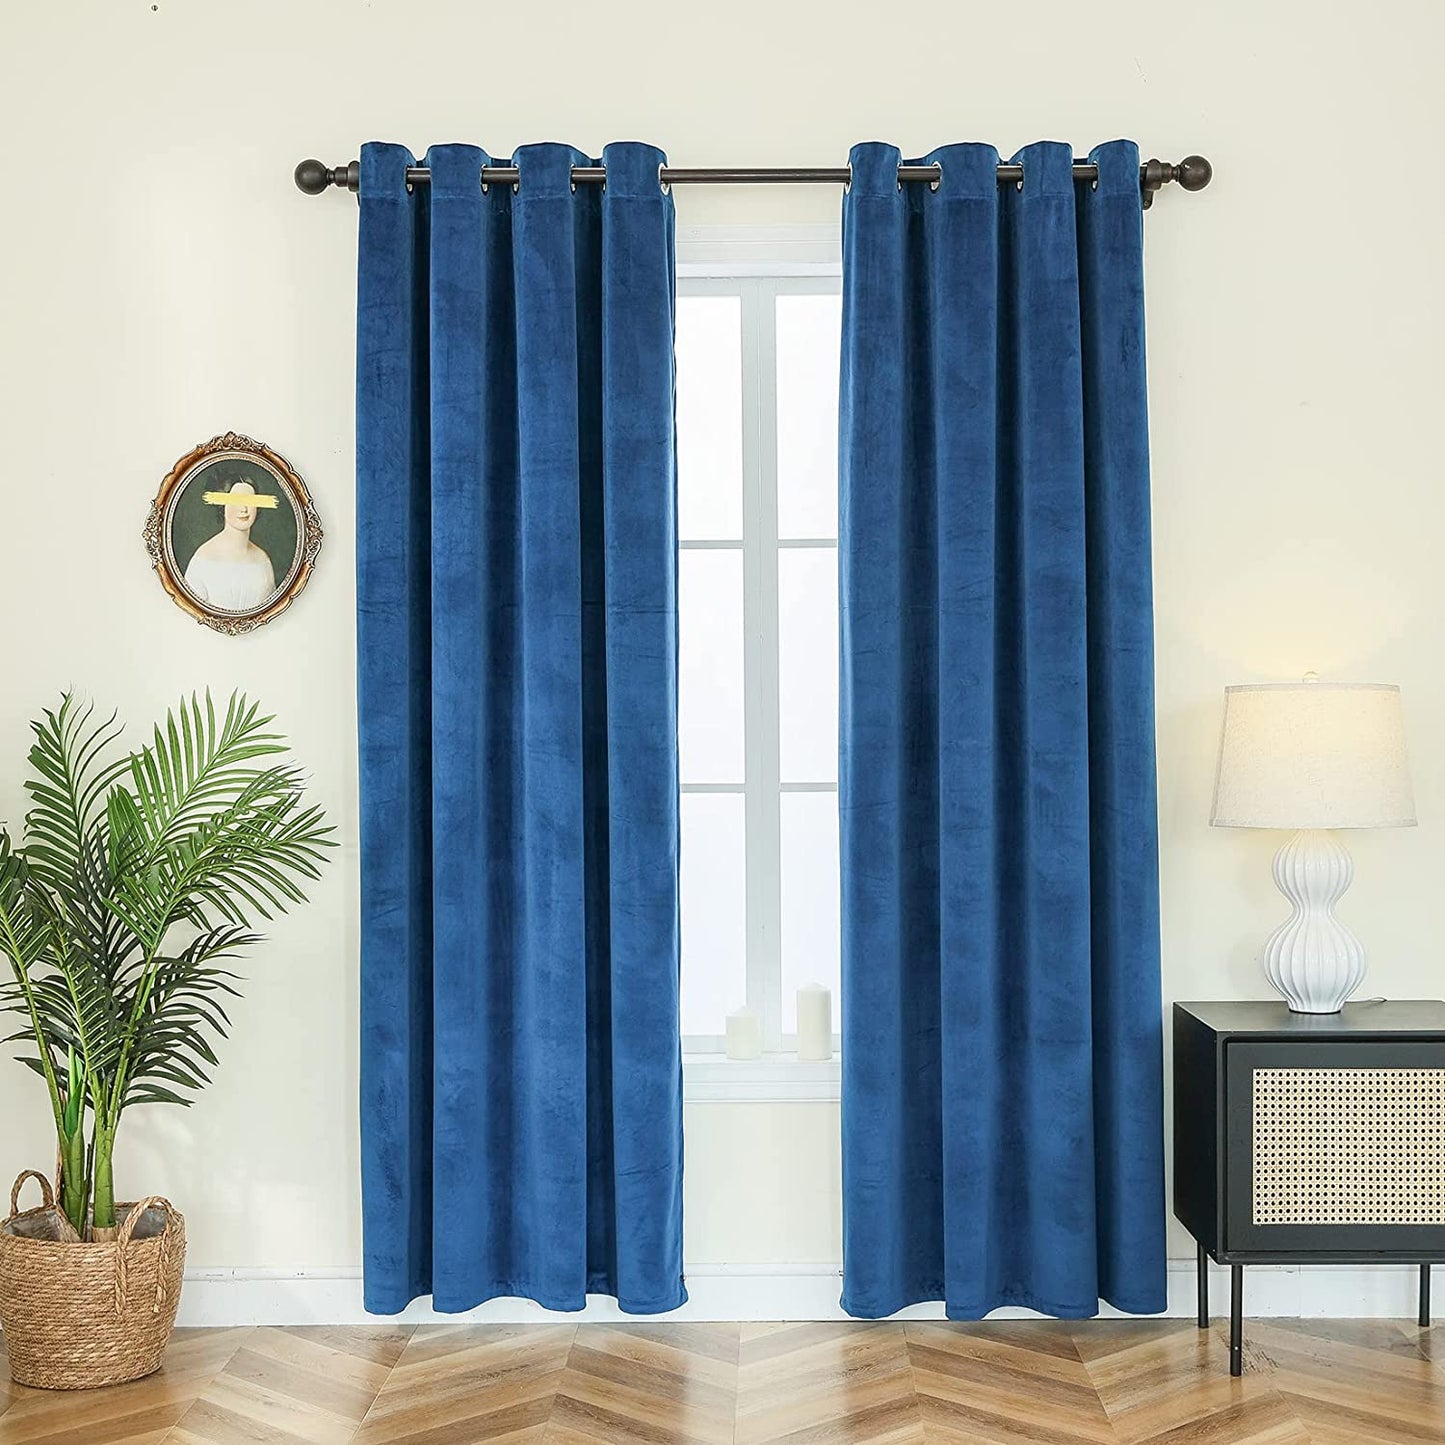 2Pcs/Pack Super Soft Velvet Blackout Drapes Thermal Insulated Royal Curtains Blackout Grommet Window Curtains